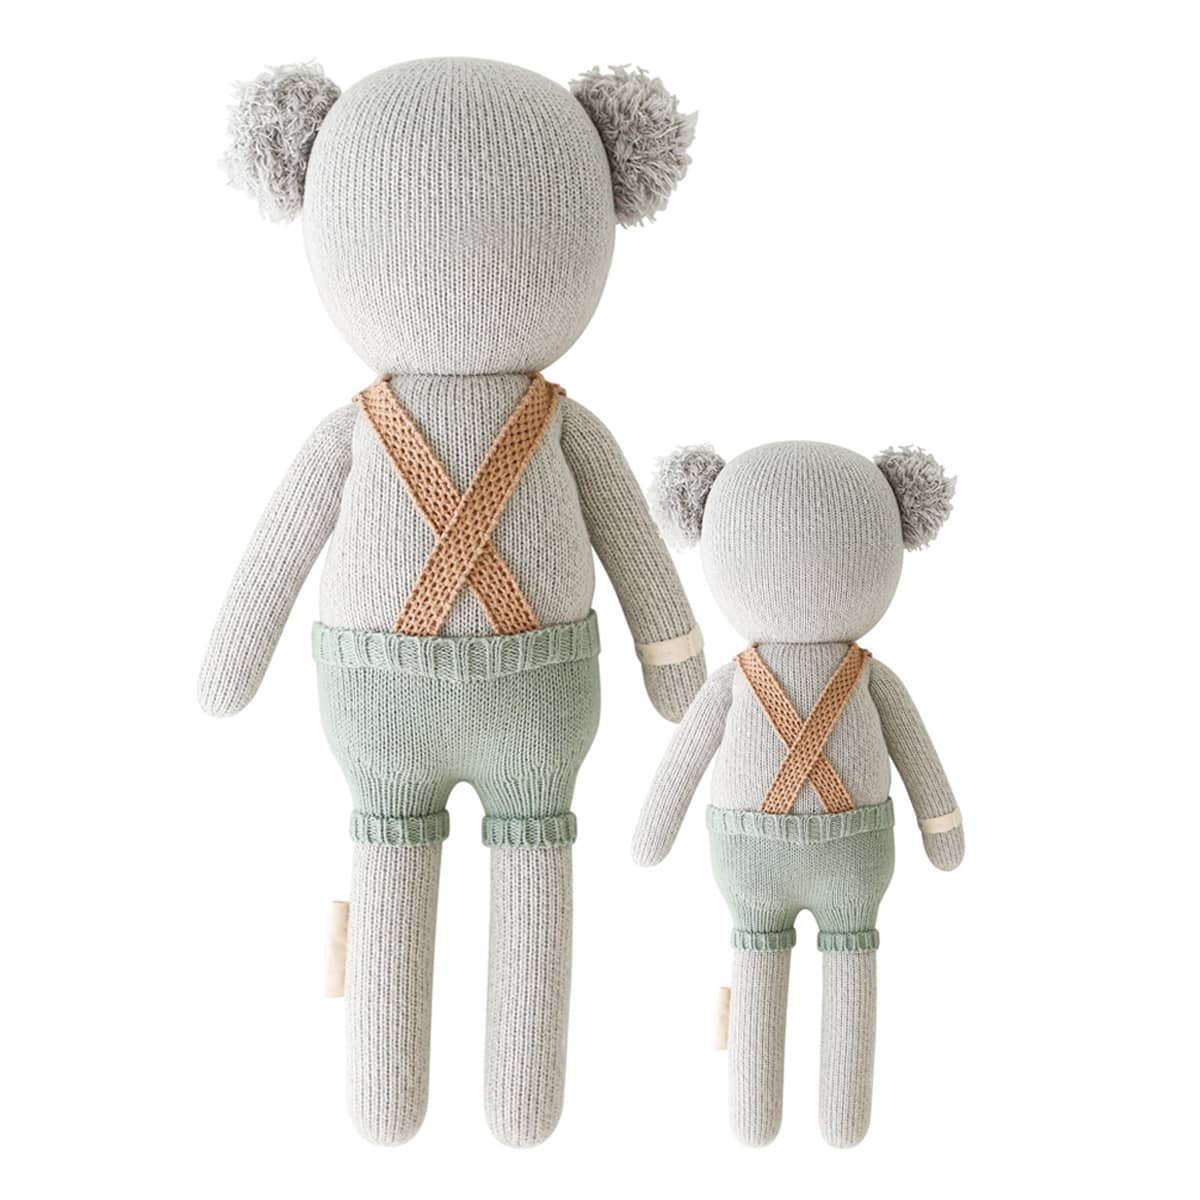 Cuddle + Kind Hand-Knit Doll - Quinn the Koala